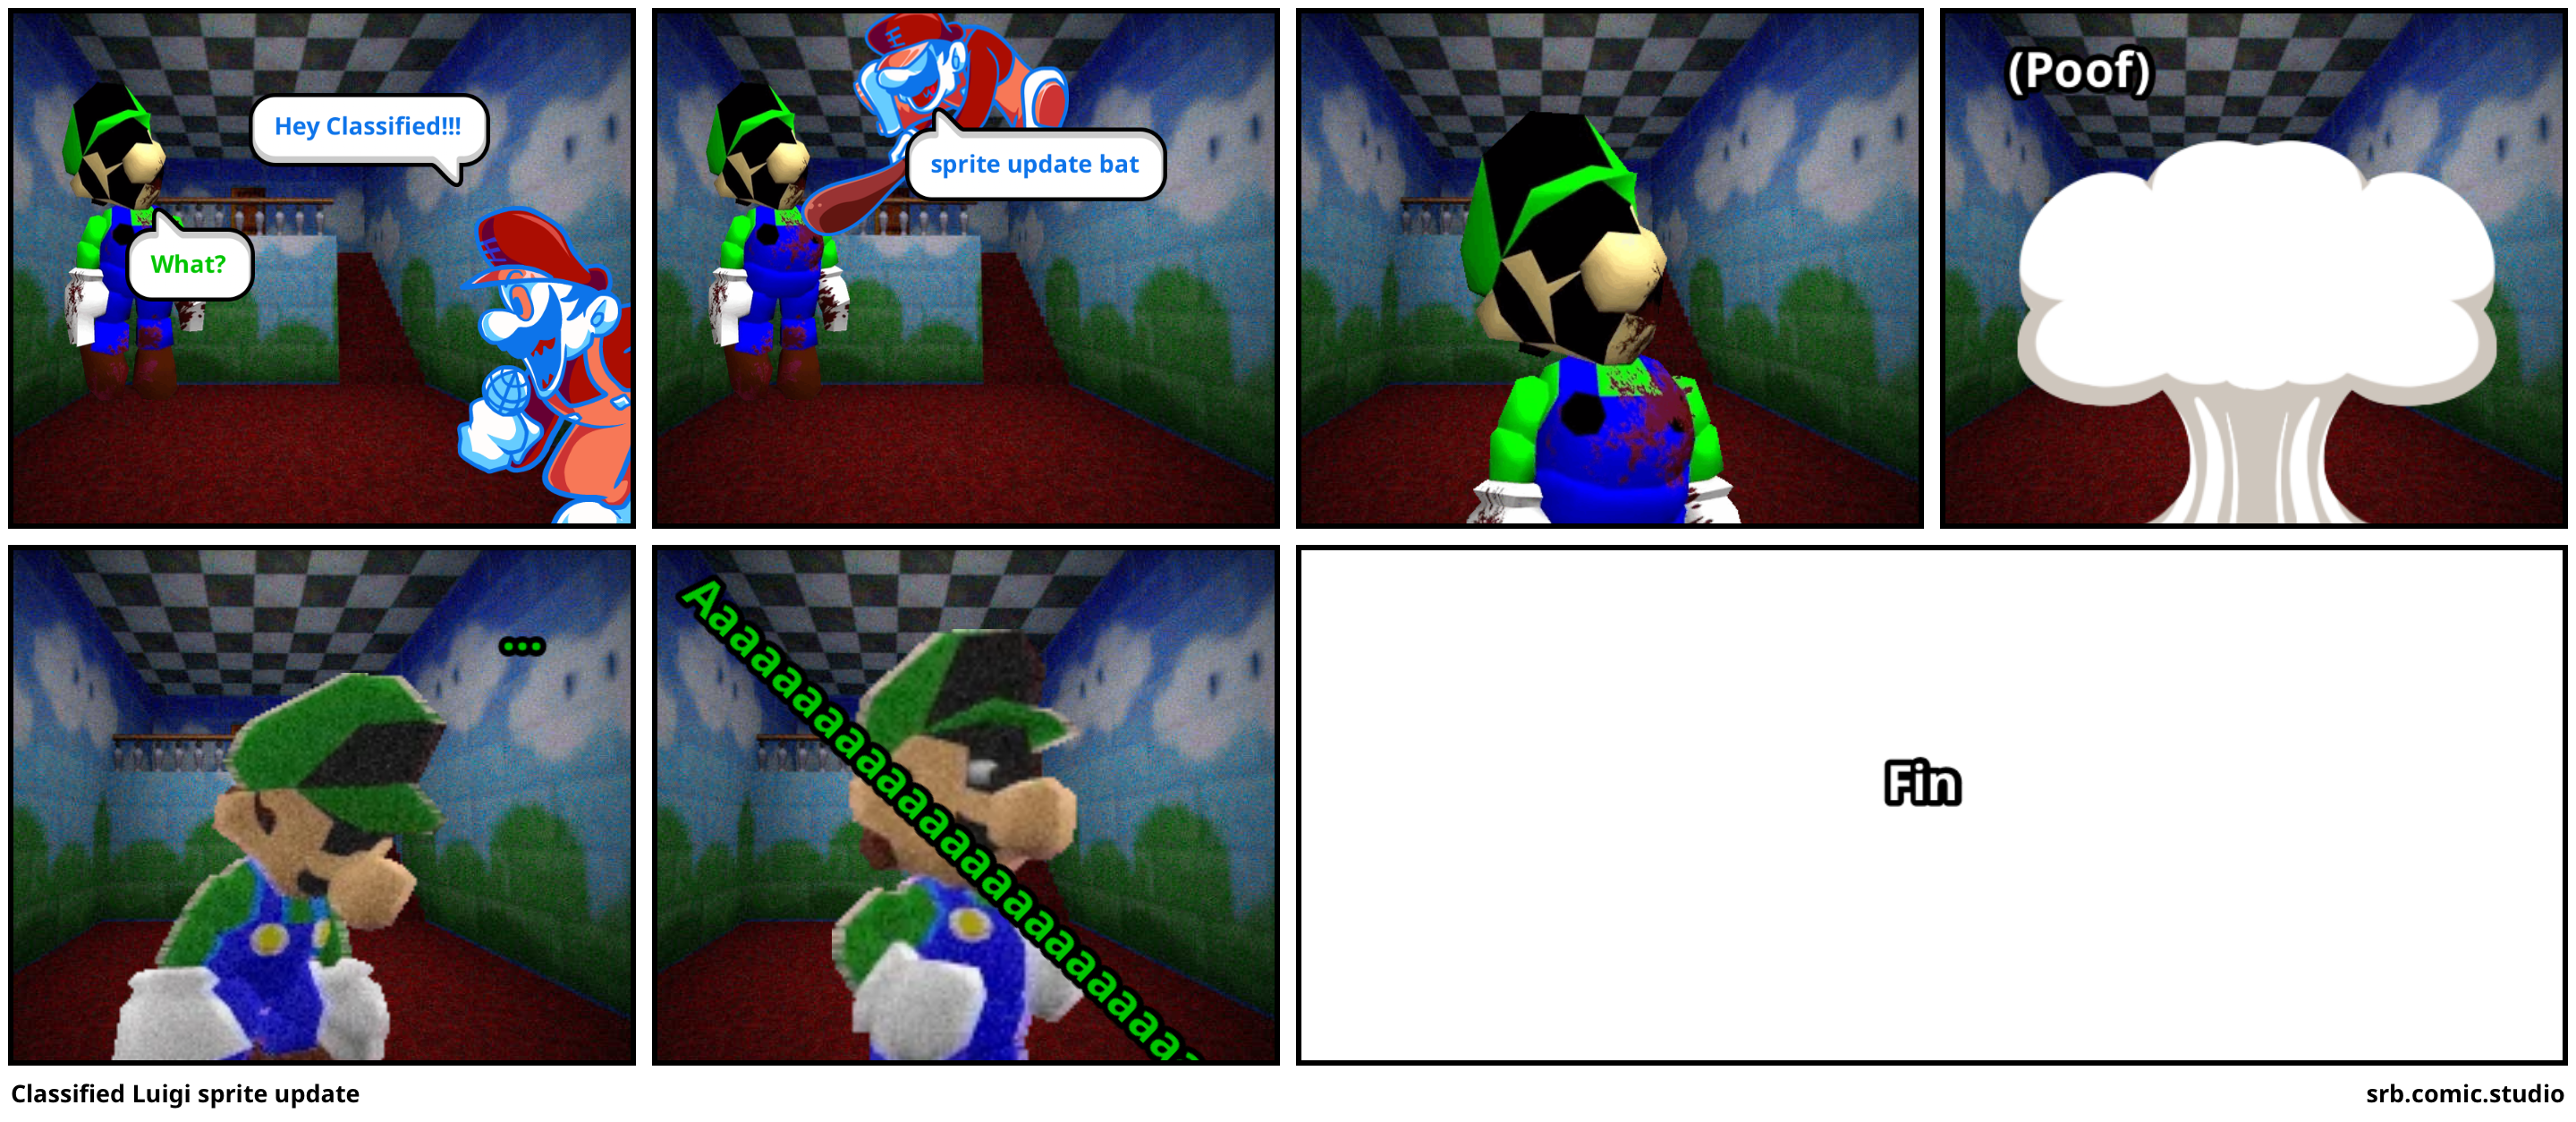 Classified Luigi sprite update